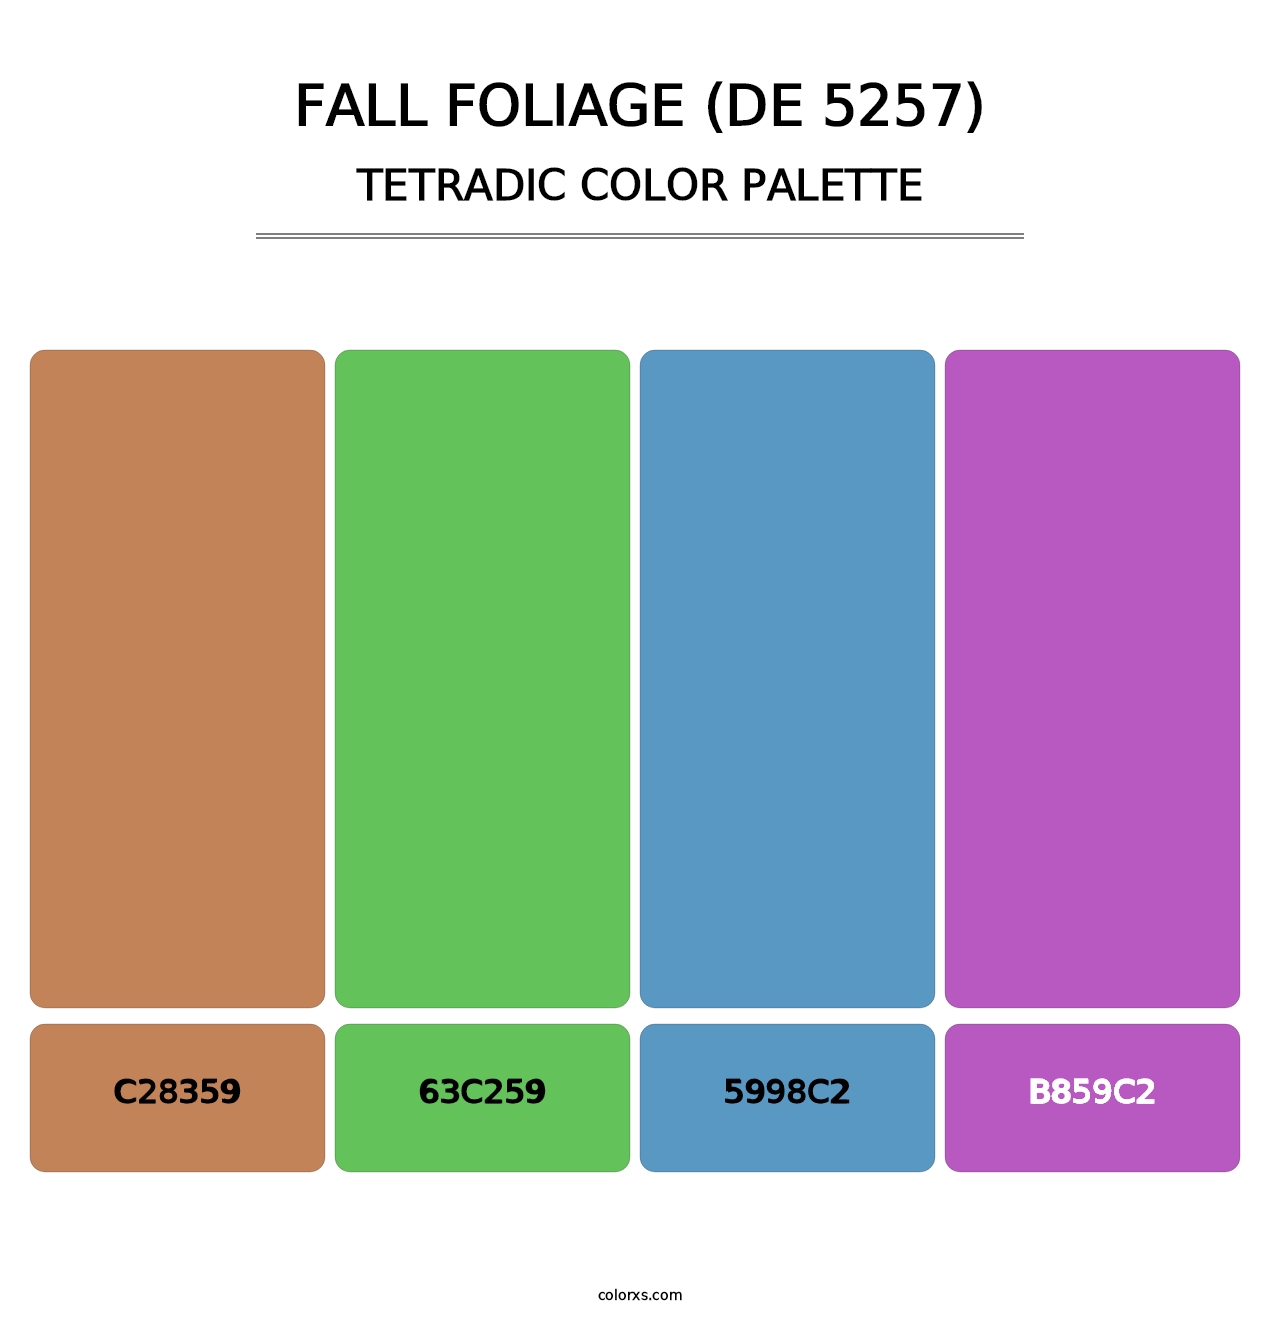 Fall Foliage (DE 5257) - Tetradic Color Palette